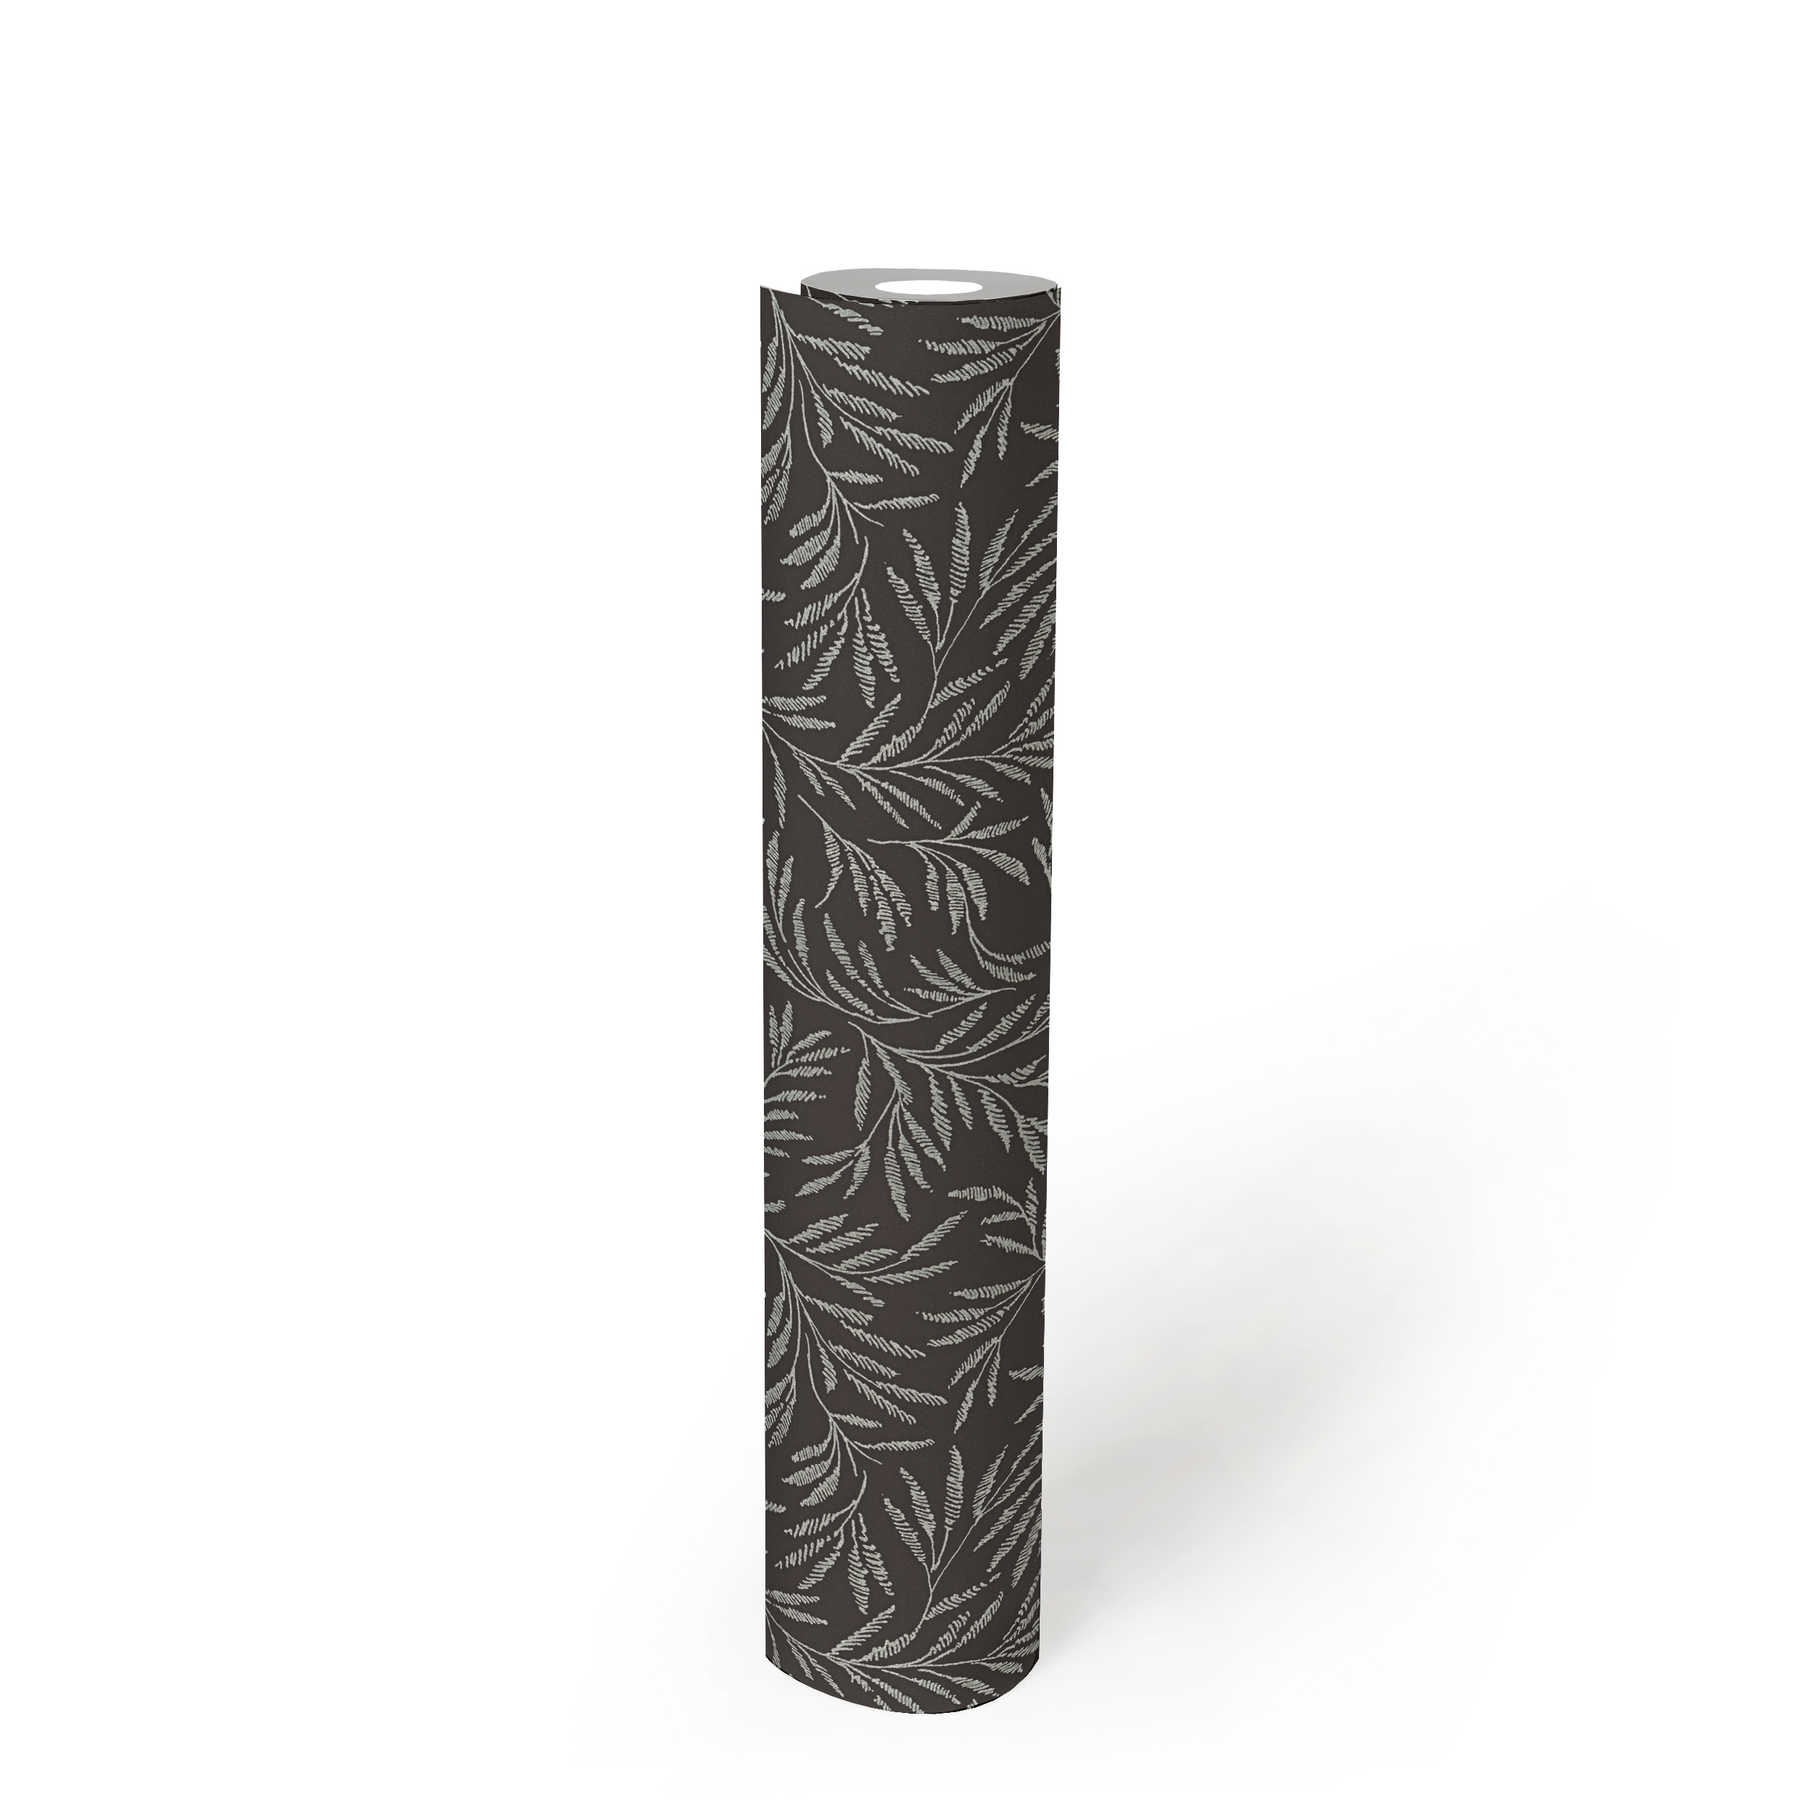             Vlie wallpaper metallic pattern with leaf tendrils - metallic, black
        